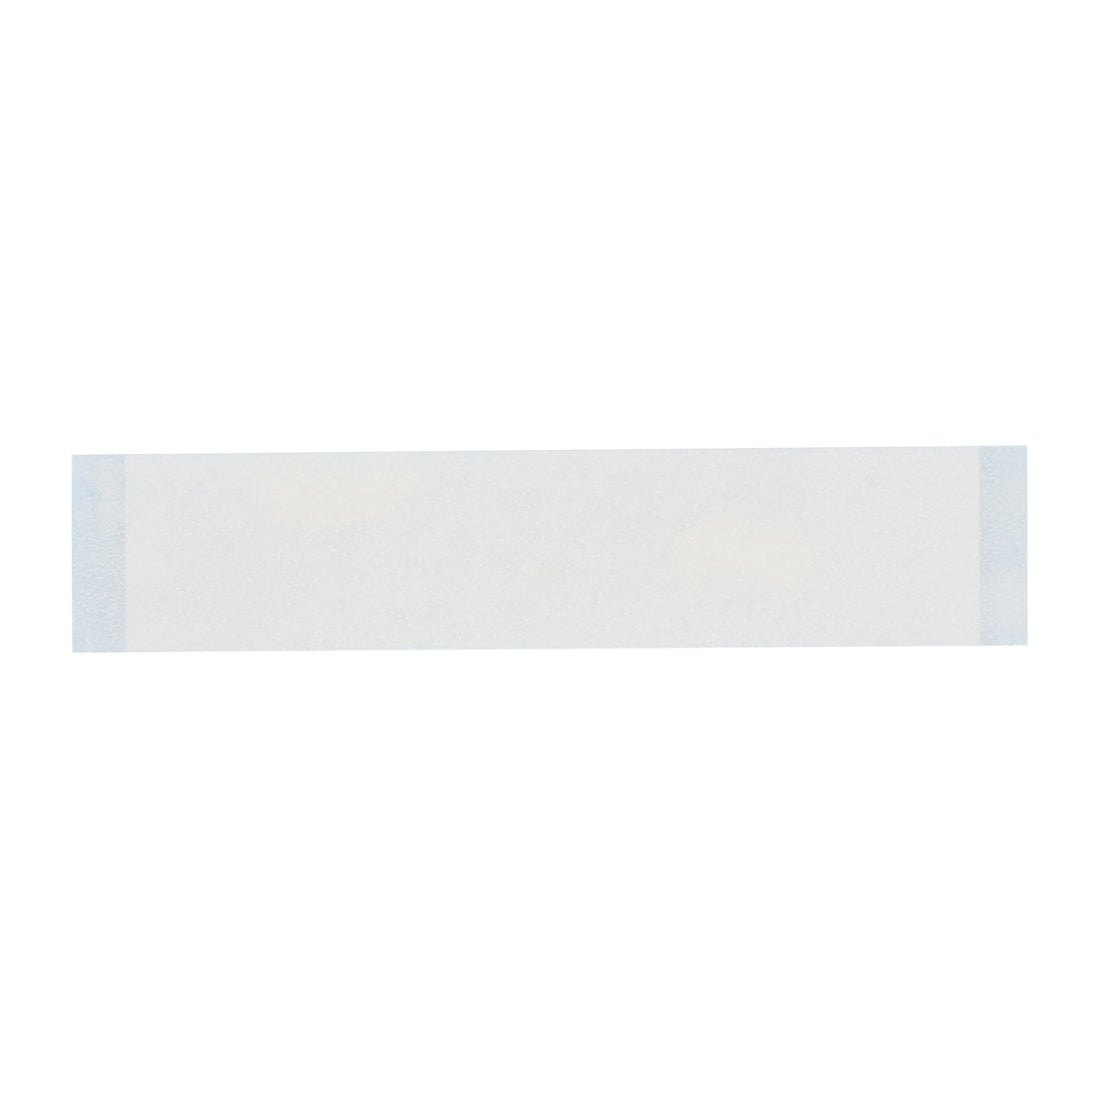 Wacoal Mood Accessories MAGIC TAPE anti-porosity tape, model MM9060, clear color